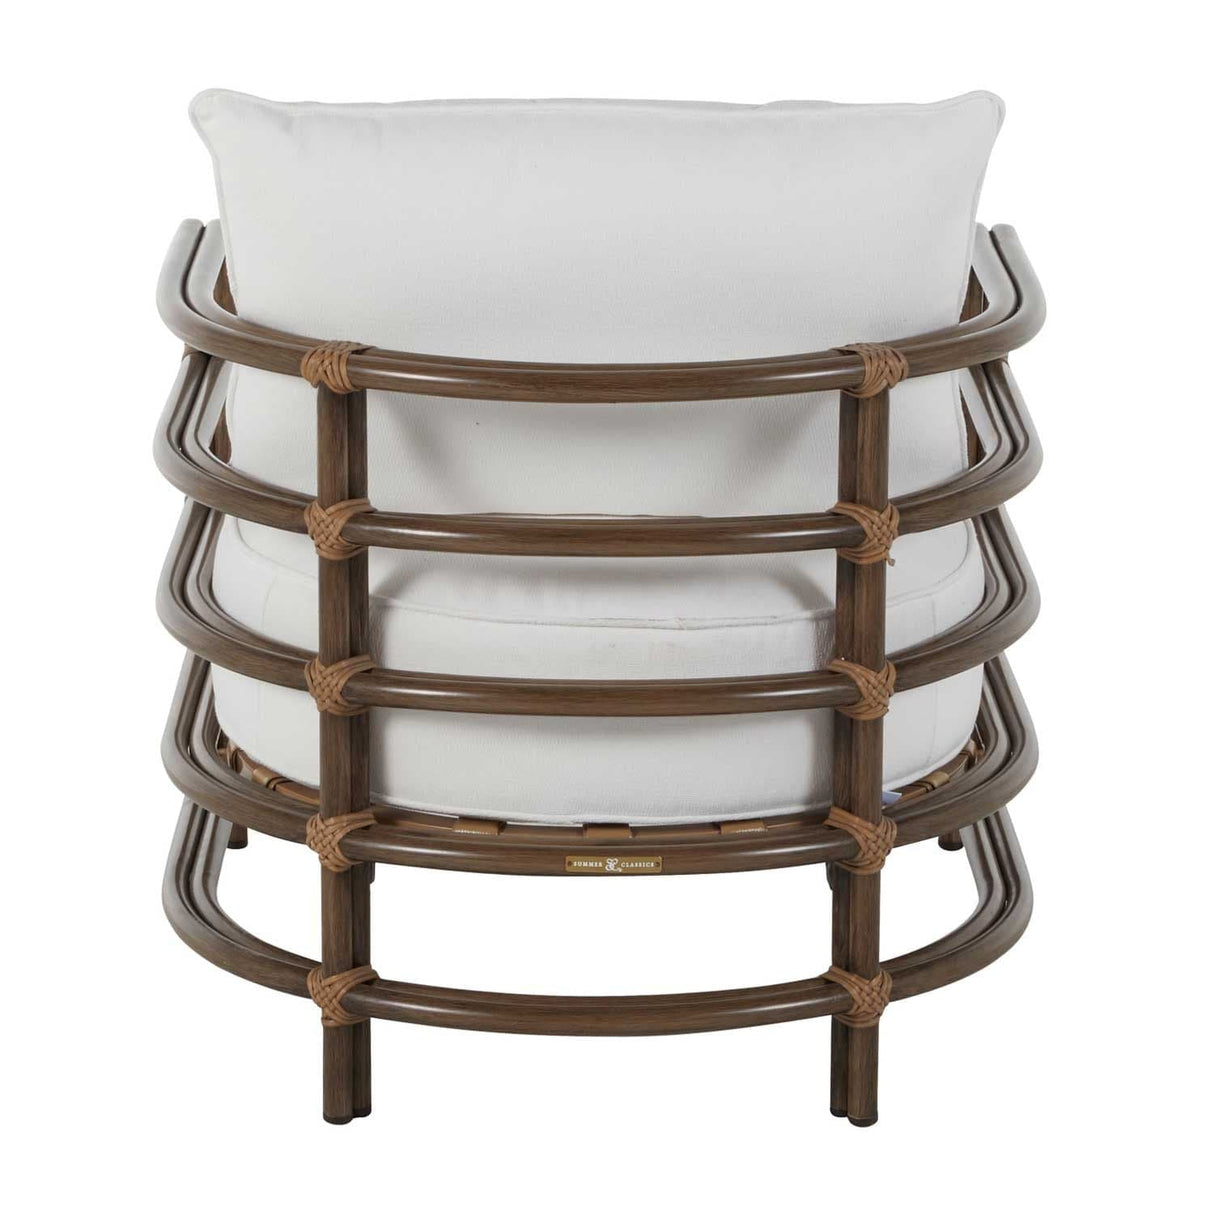 Summer Classics Malibu Barrel Chair Furniture summer-classics-313080+C690H3884W3884